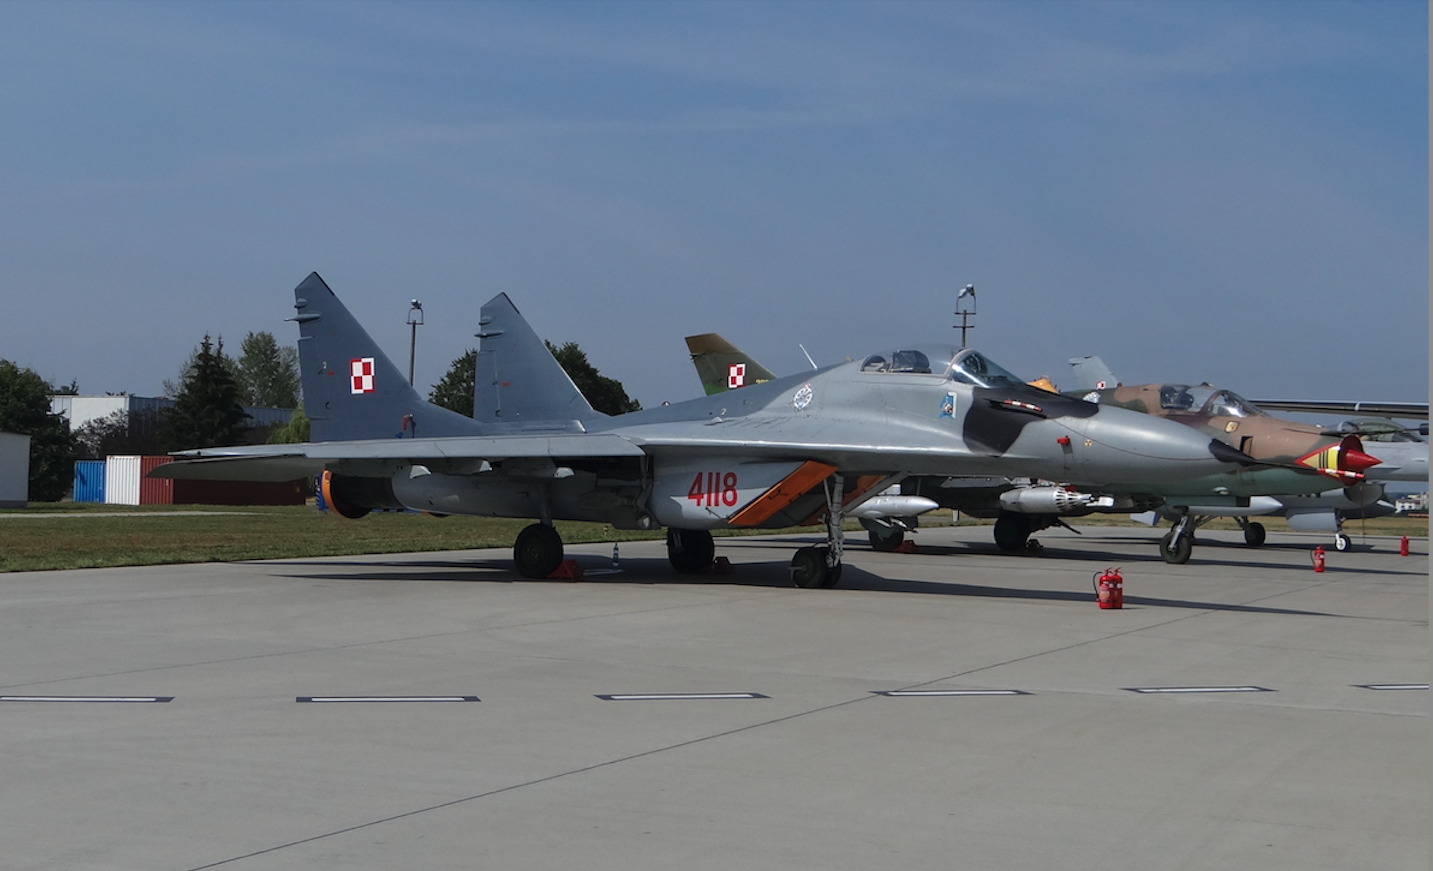 MiG-29 nb 4118. 2017 rok. Zdjęcie Karol Placha Hetman